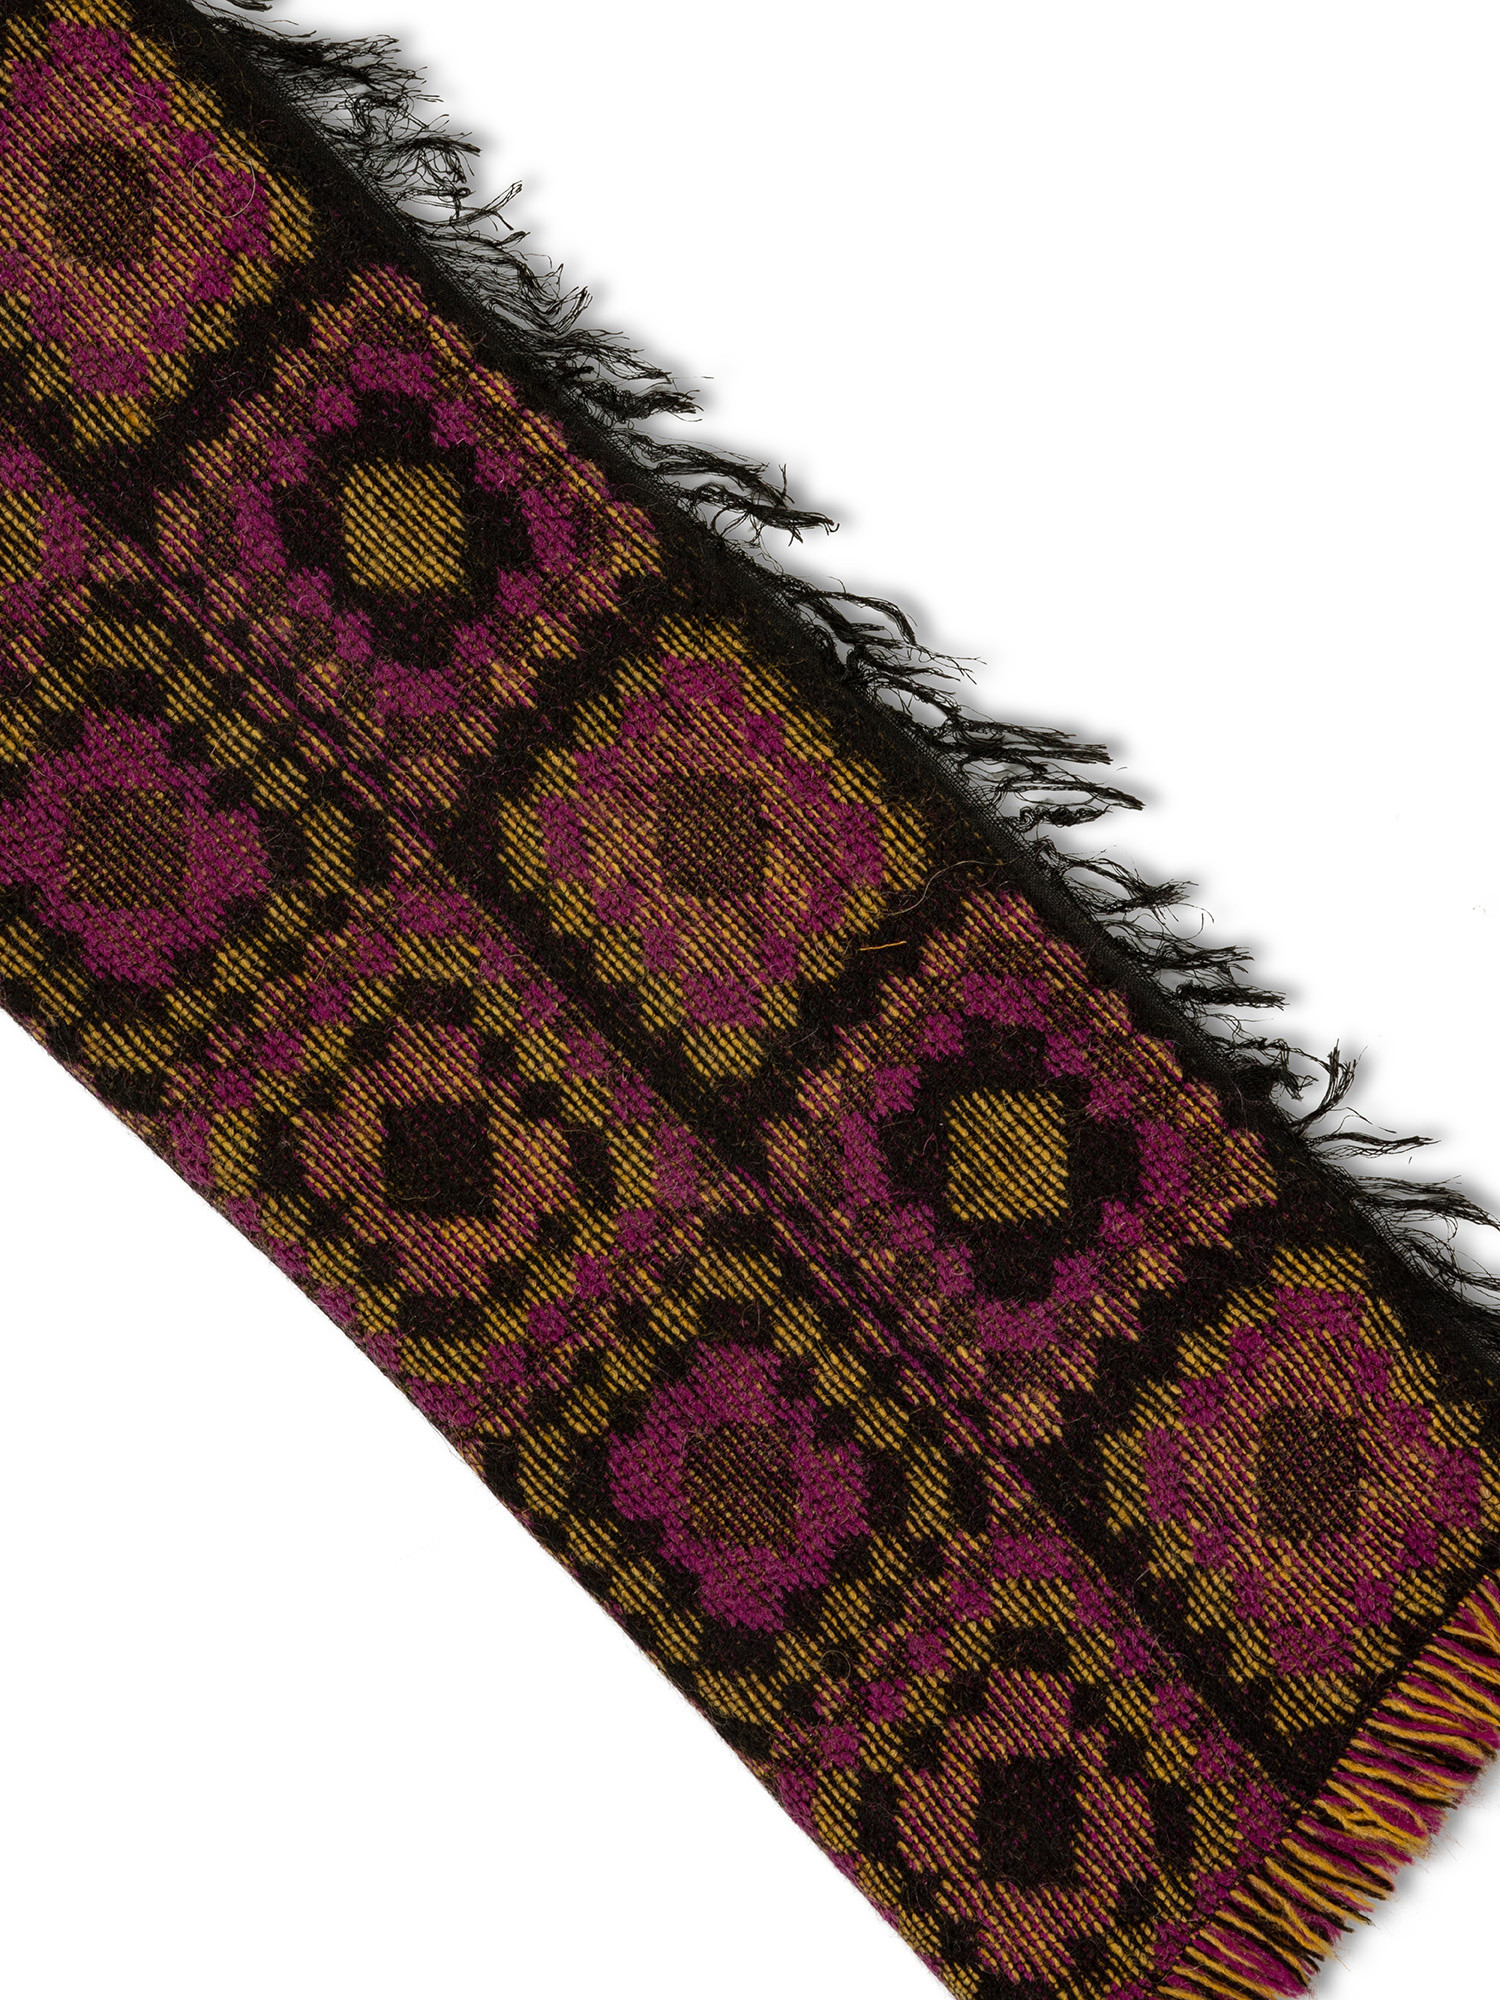 Koan - Patterned stole, Multicolor, large image number 1